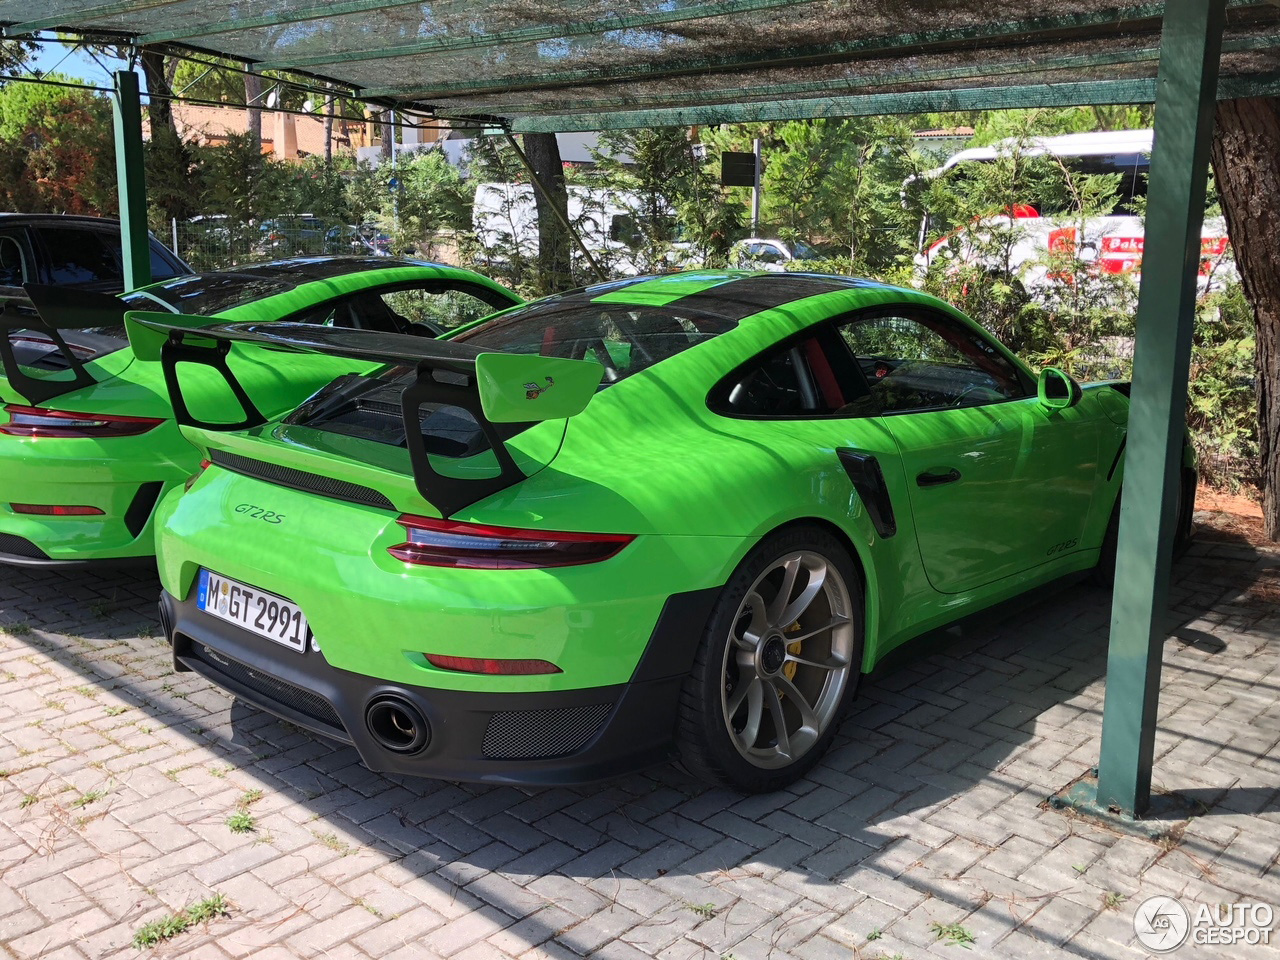 Groene Porsche combo schittert in Italië